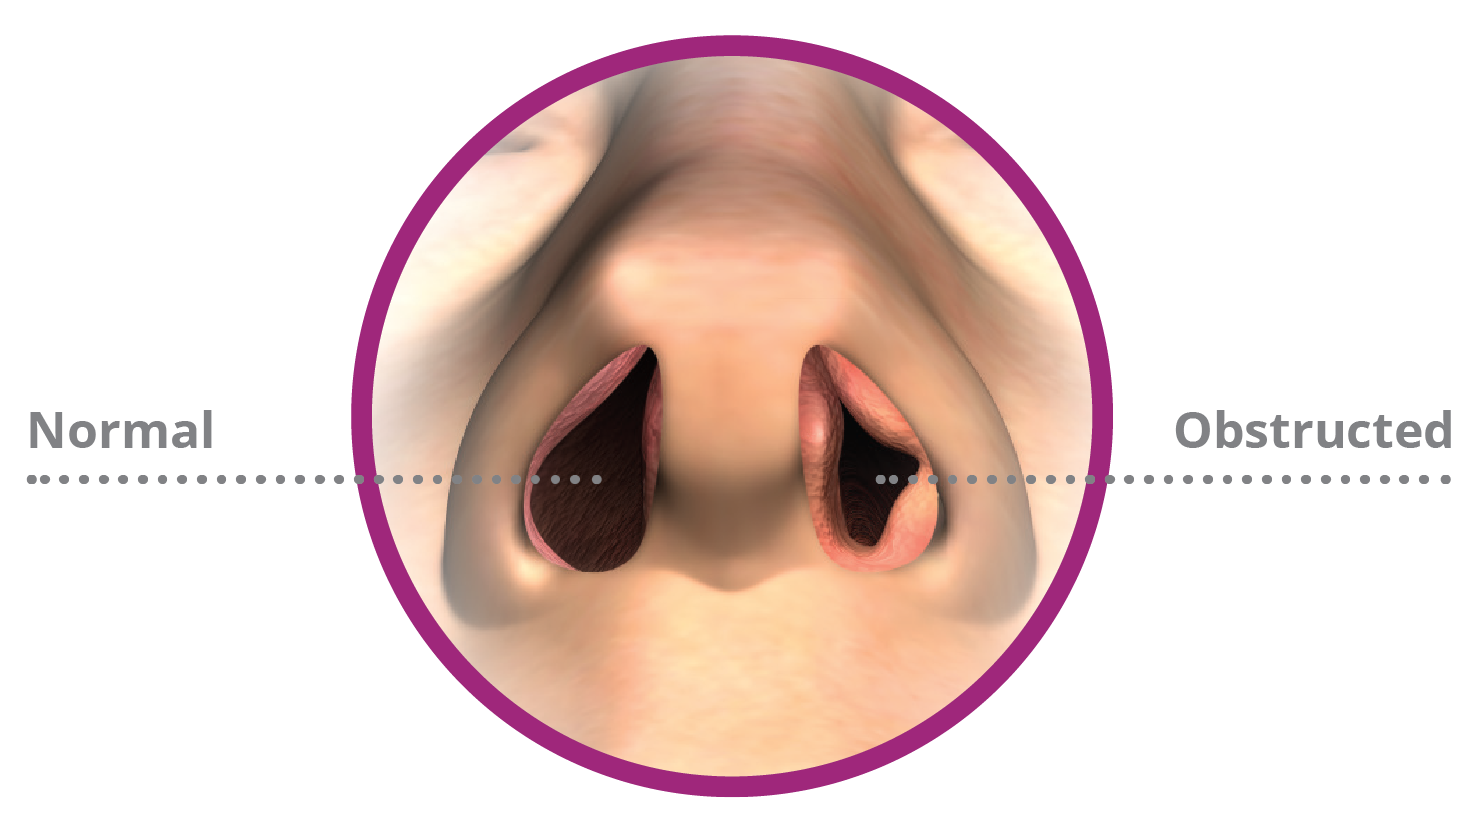 Illustration of normal nostrils and obstructed or congested nostrils